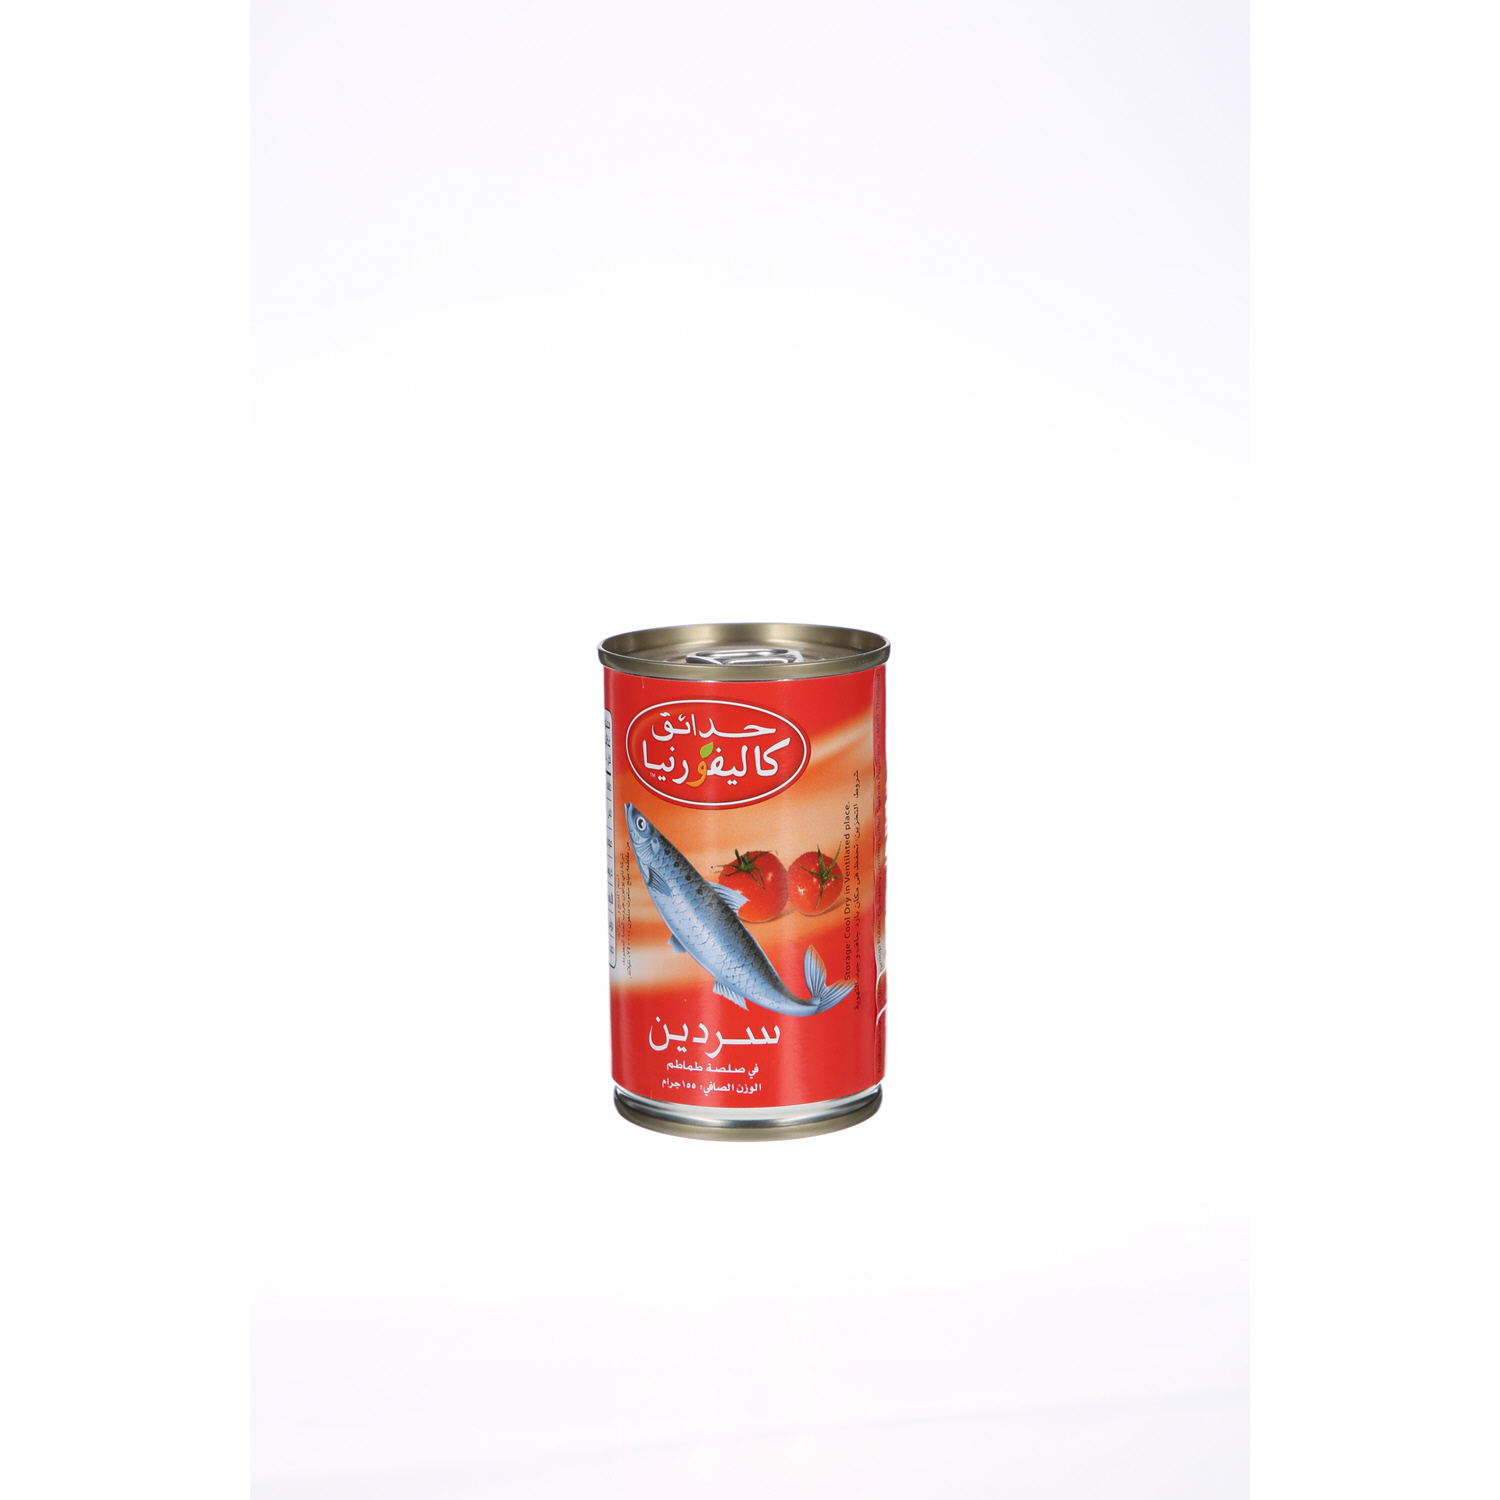 California Garden Sardine In Tomato Sauce 155 g